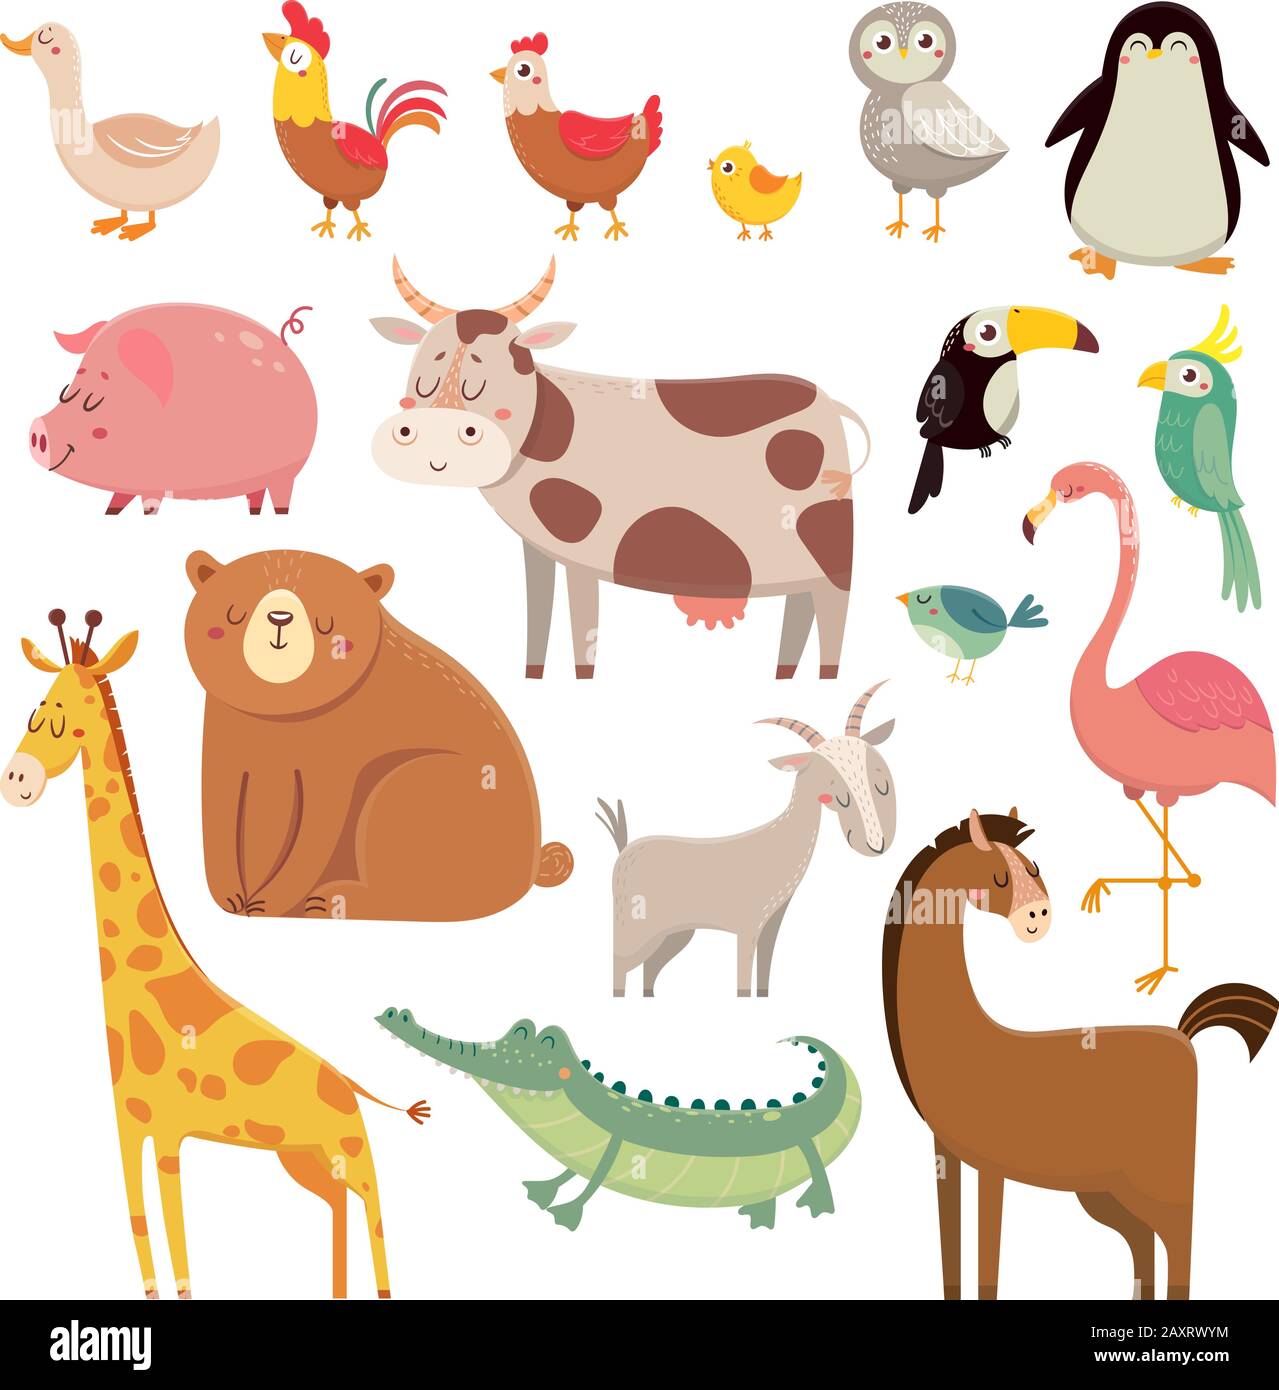 Baby cartoons wild bear, giraffe, crocodile, bird Stock Vector